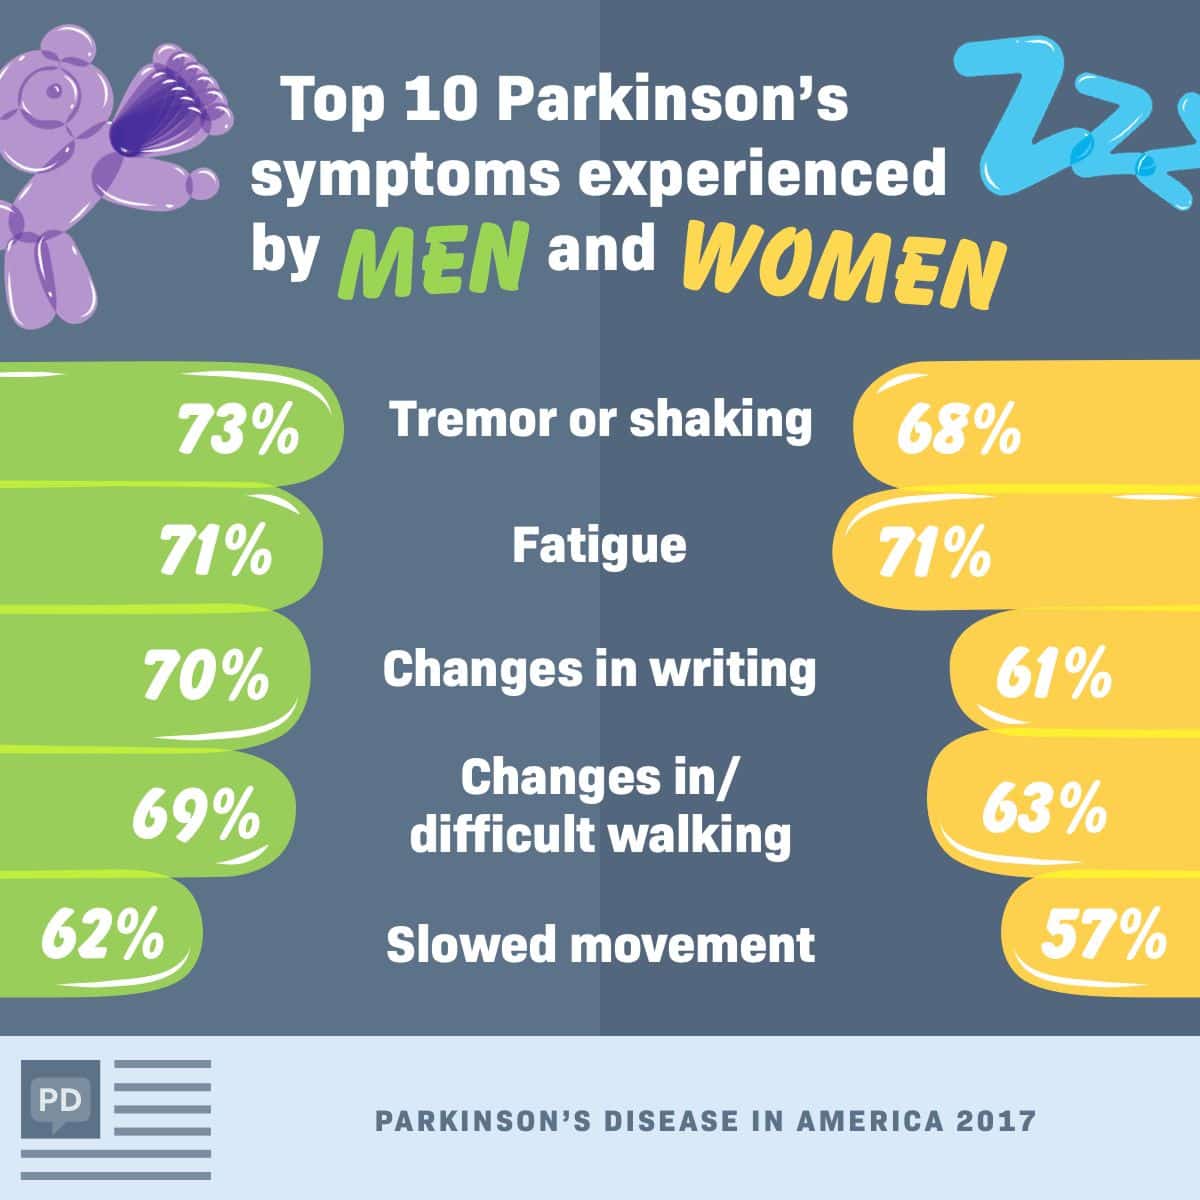 Other Symptoms of Parkinson